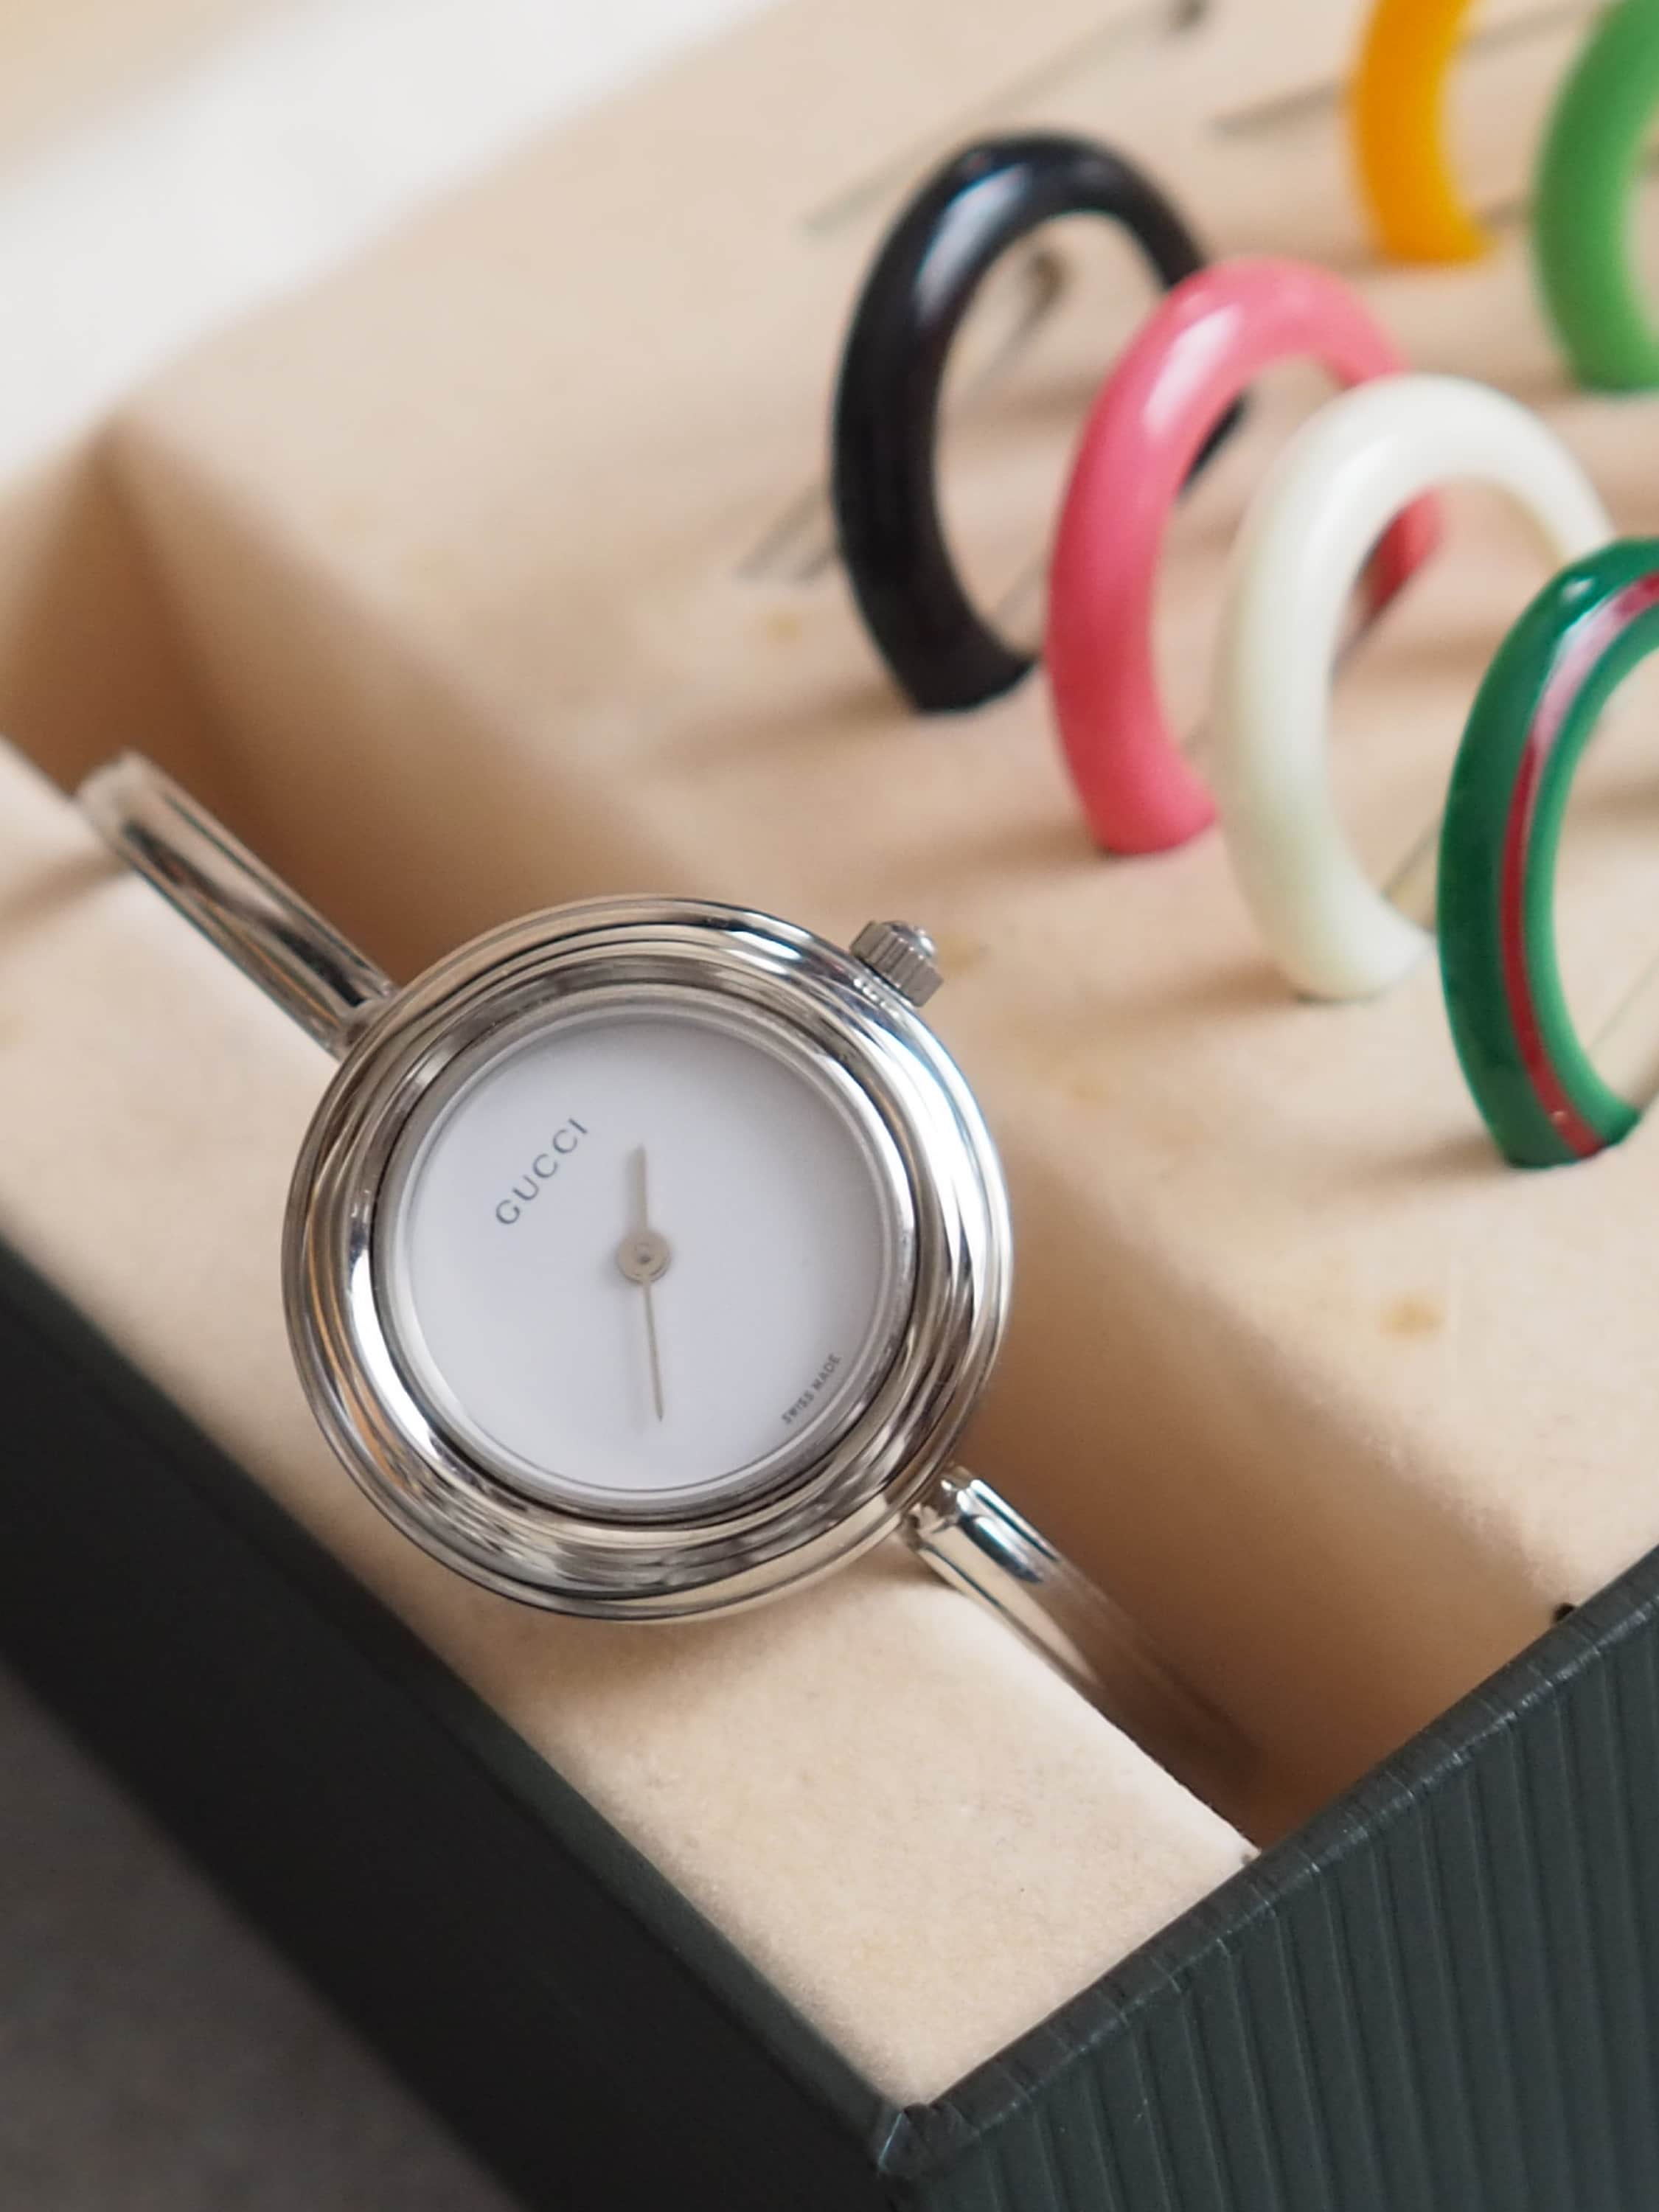 GUCCI Accessories Change Bezel 9 colors Bangle watch Wristwatch Silver